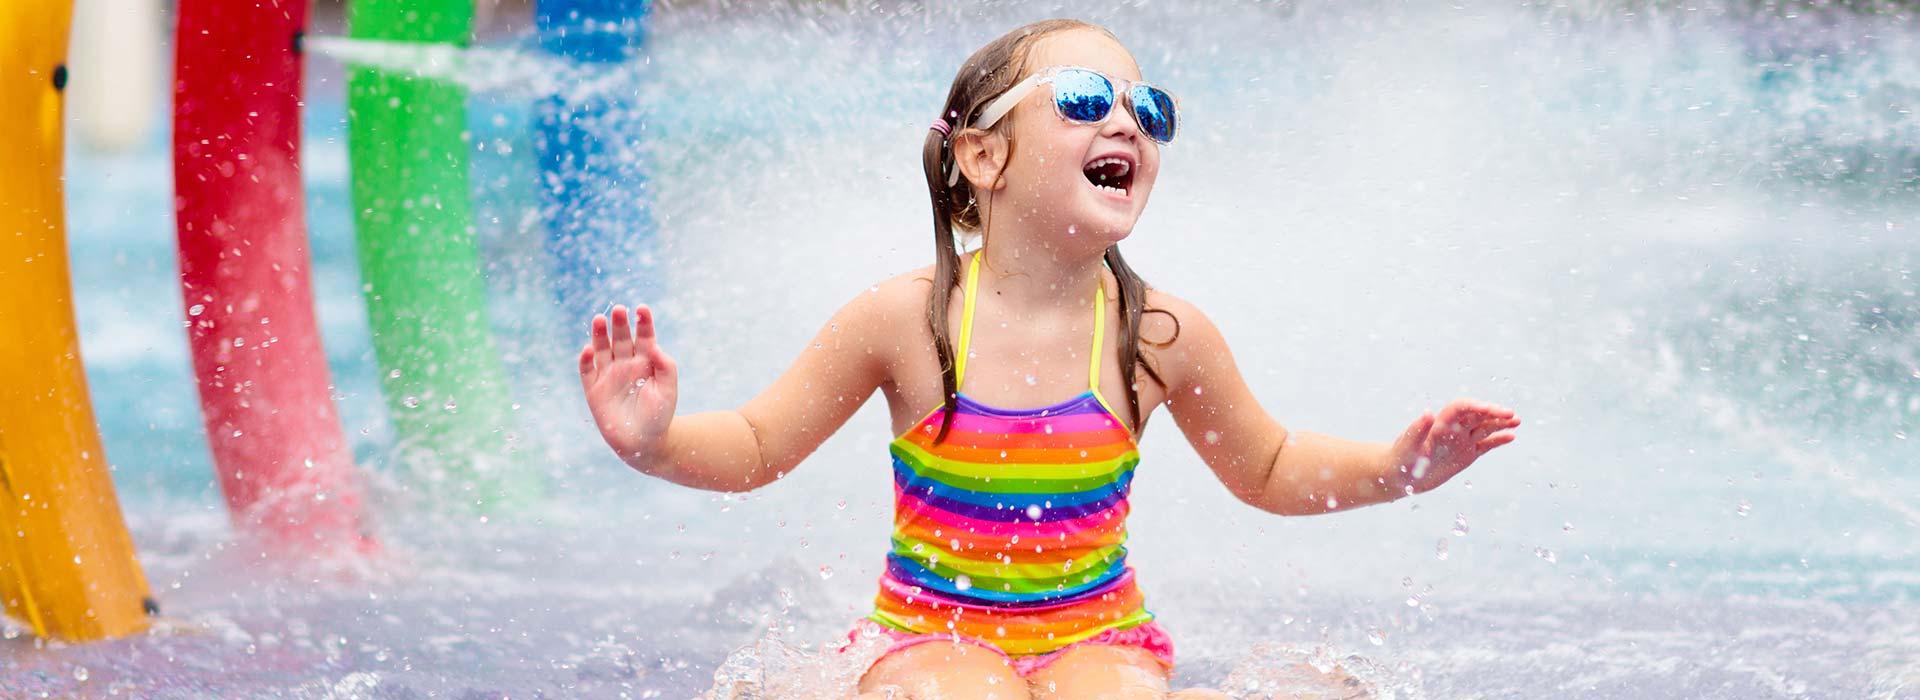 Girl laughs sitting on splash pad under water rings